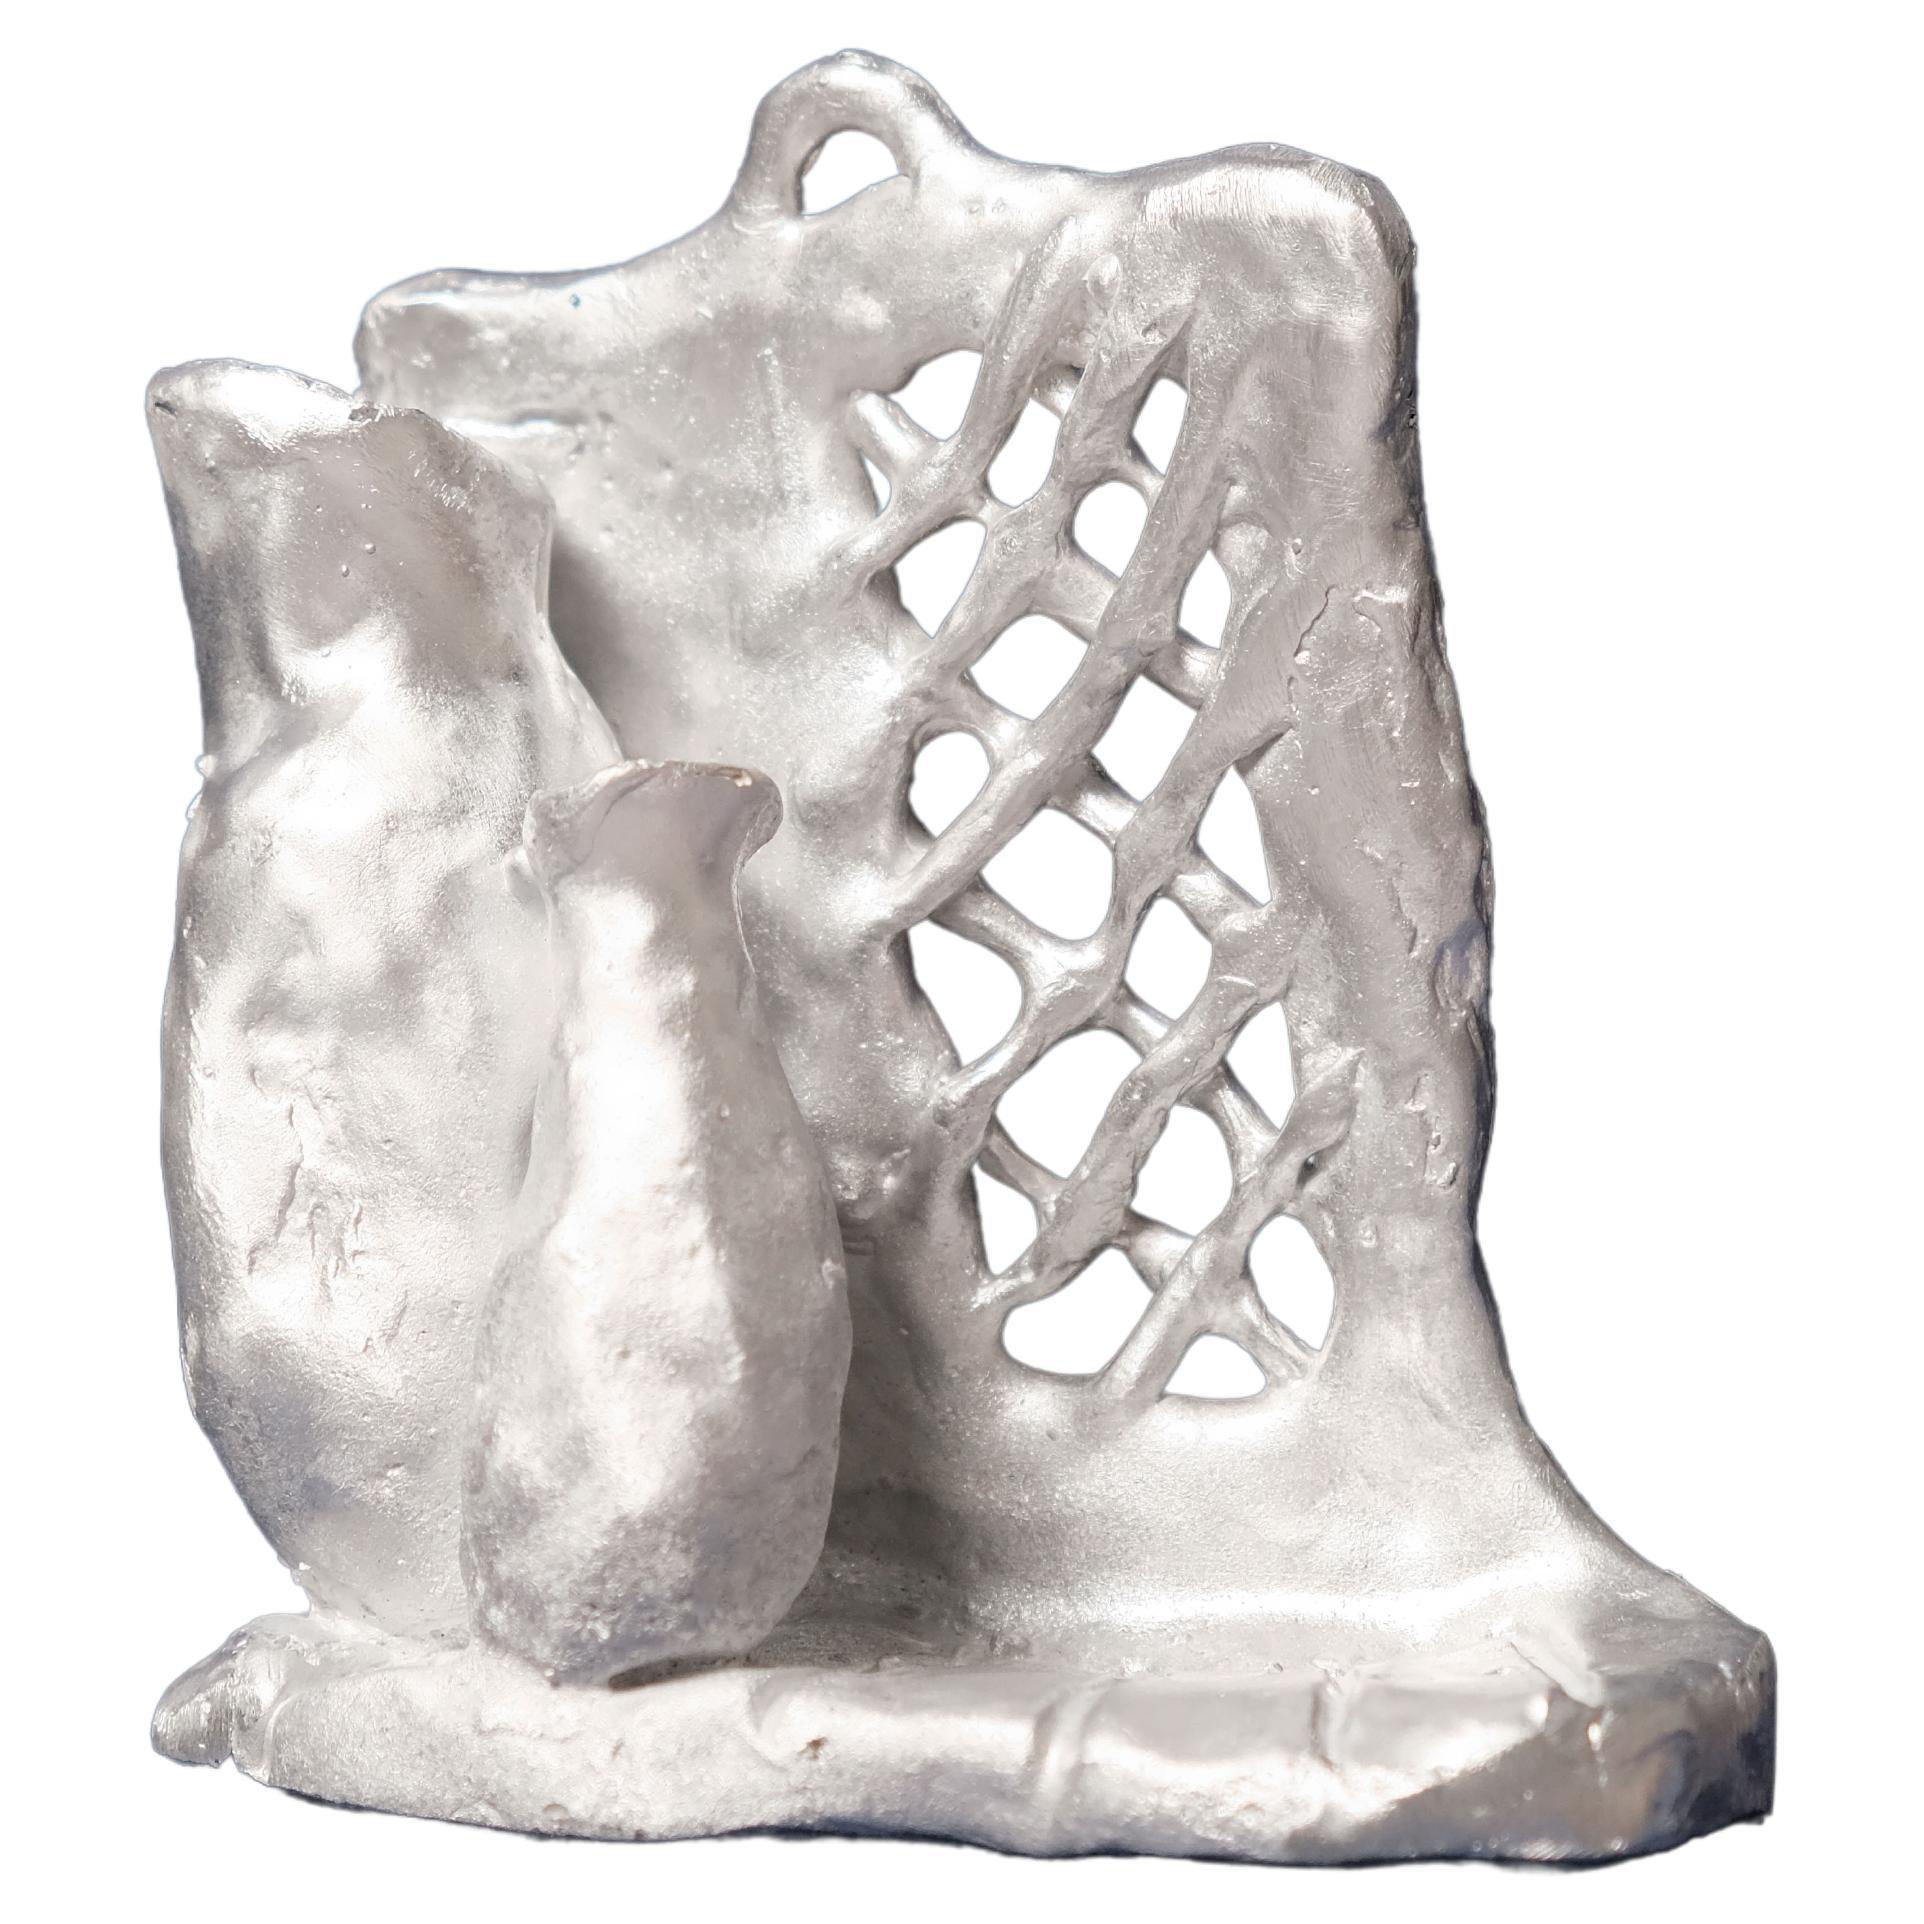 Handmade Aluminium cast wall sculpture depicting "Instant Wall"  For Sale